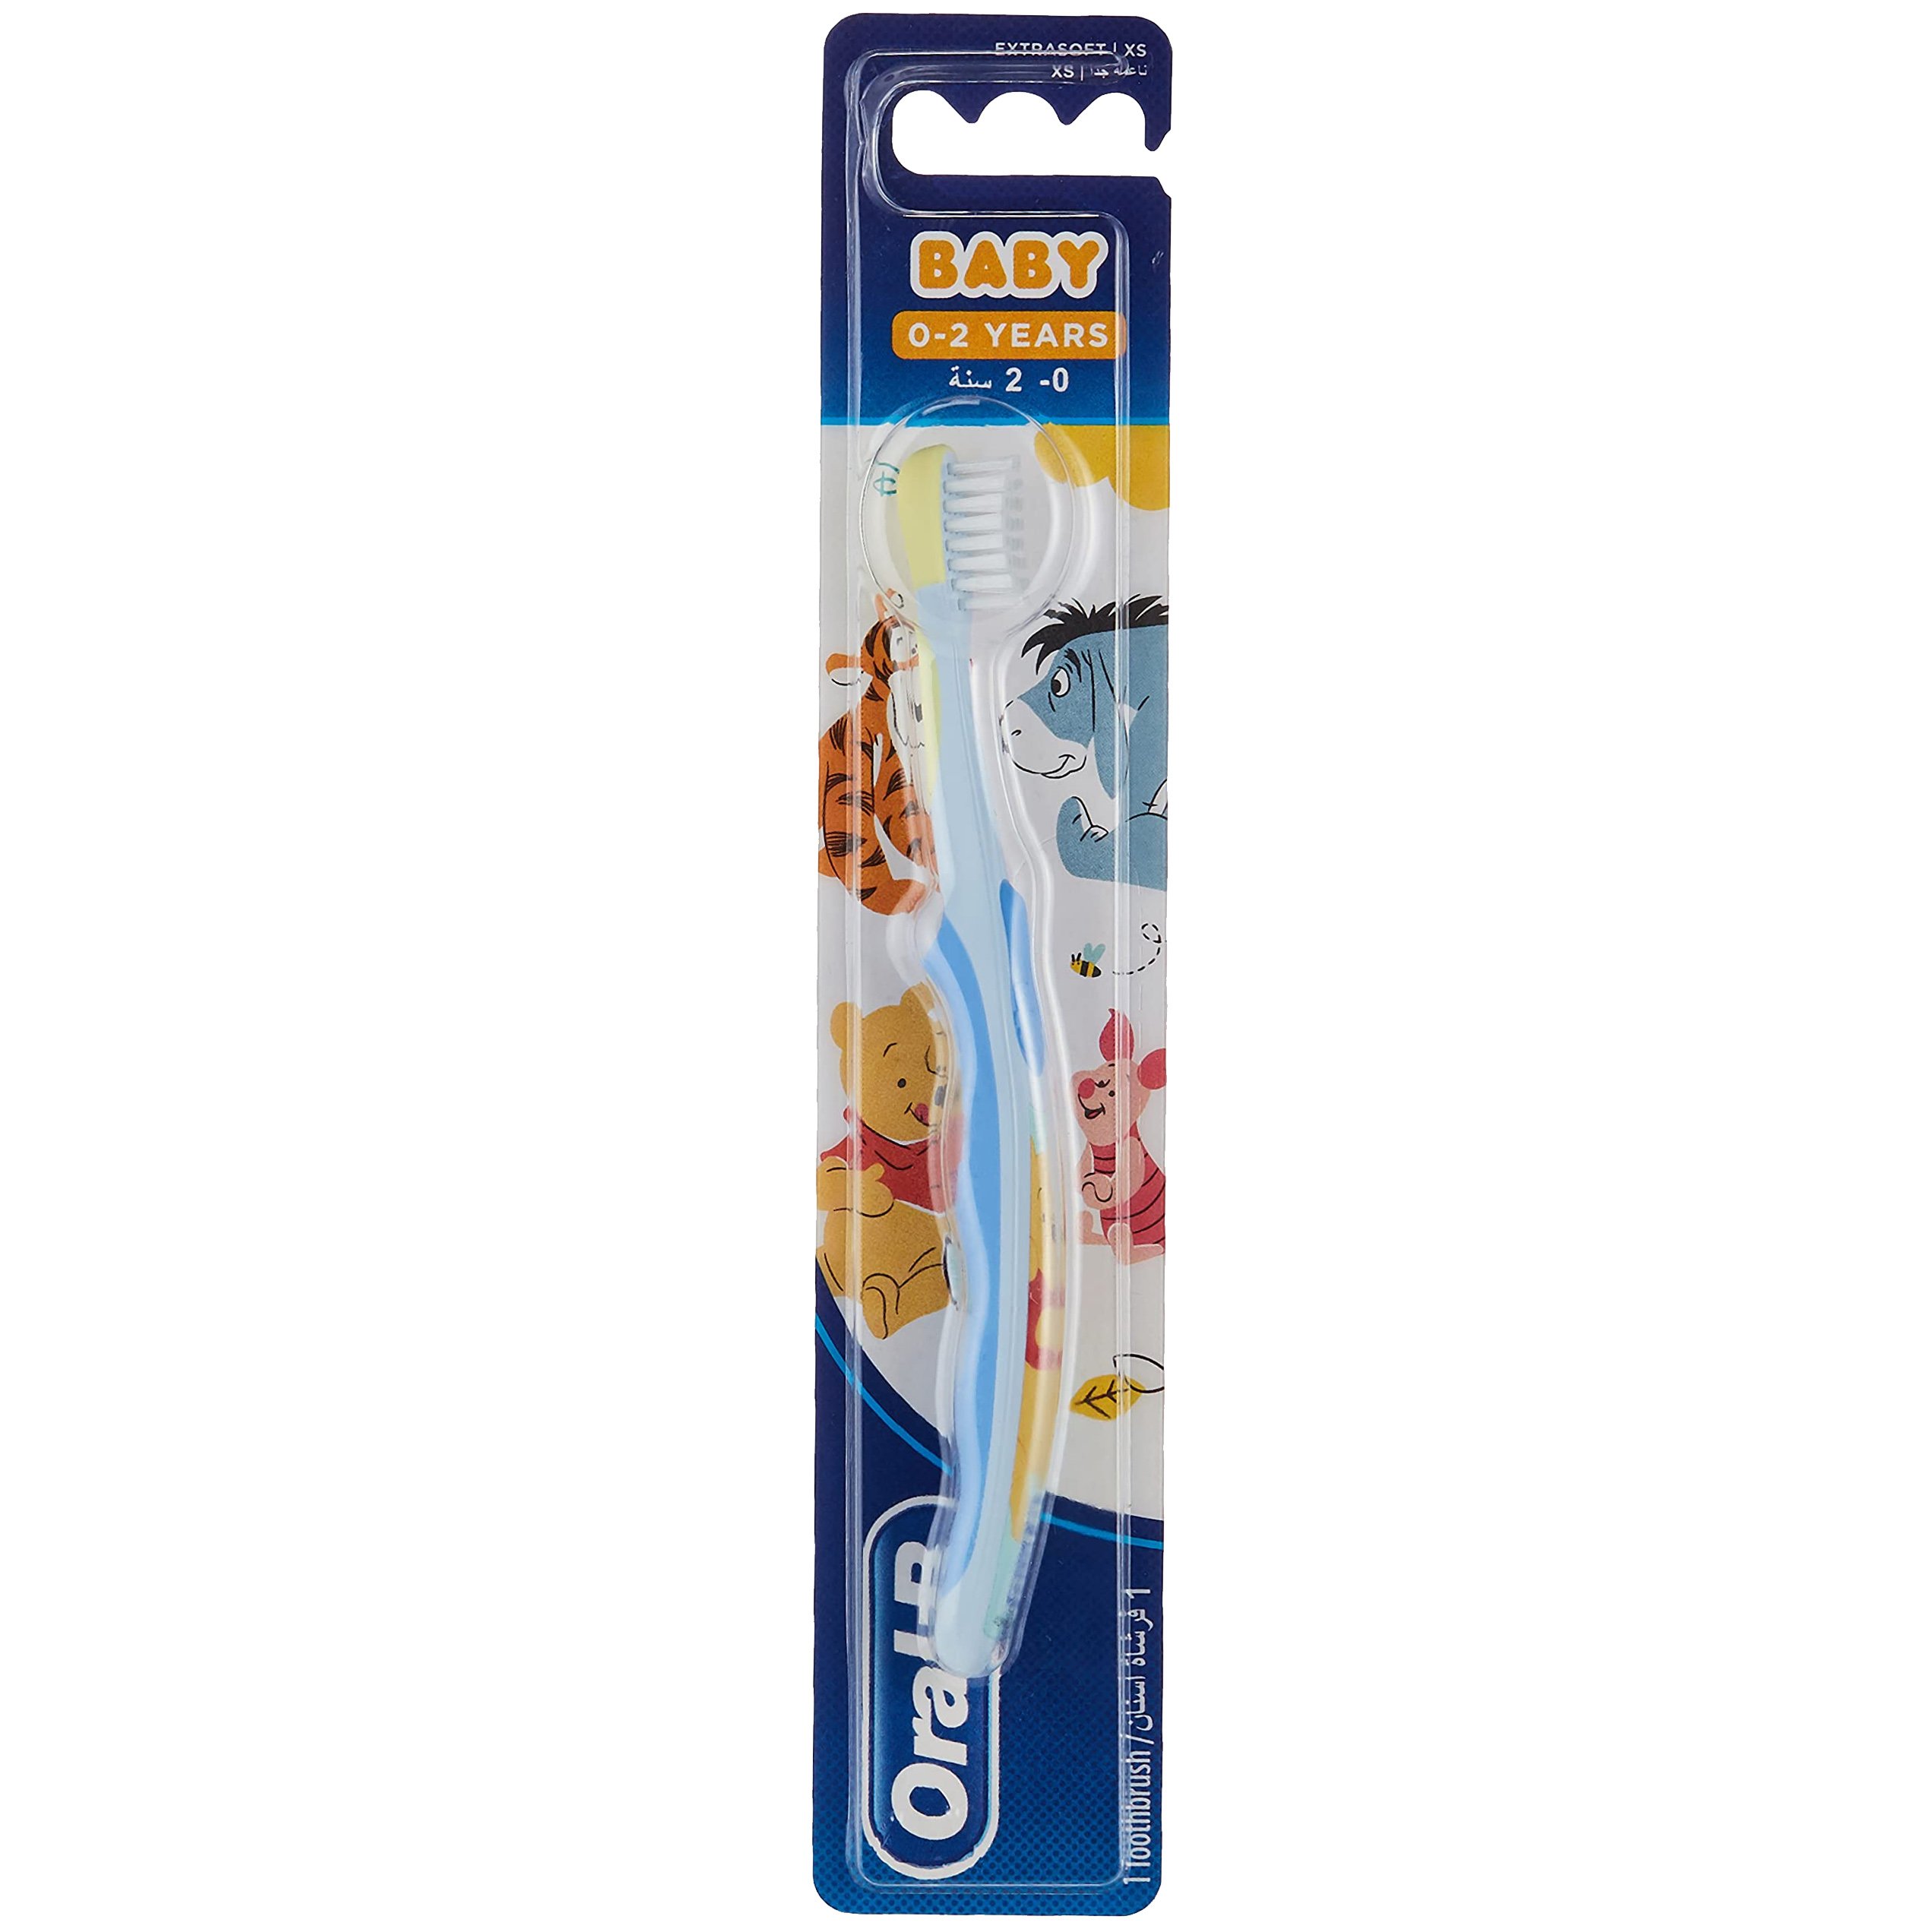 Oral-B Baby Winnie the Pooh Toothbrush 0-2 Years Extra Soft Πολύ Μαλακή Οδοντόβουρτσα Ειδικά Σχεδιασμένη για τα Πρώτα Δοντάκια 1 Τεμάχιο – Γαλάζιο